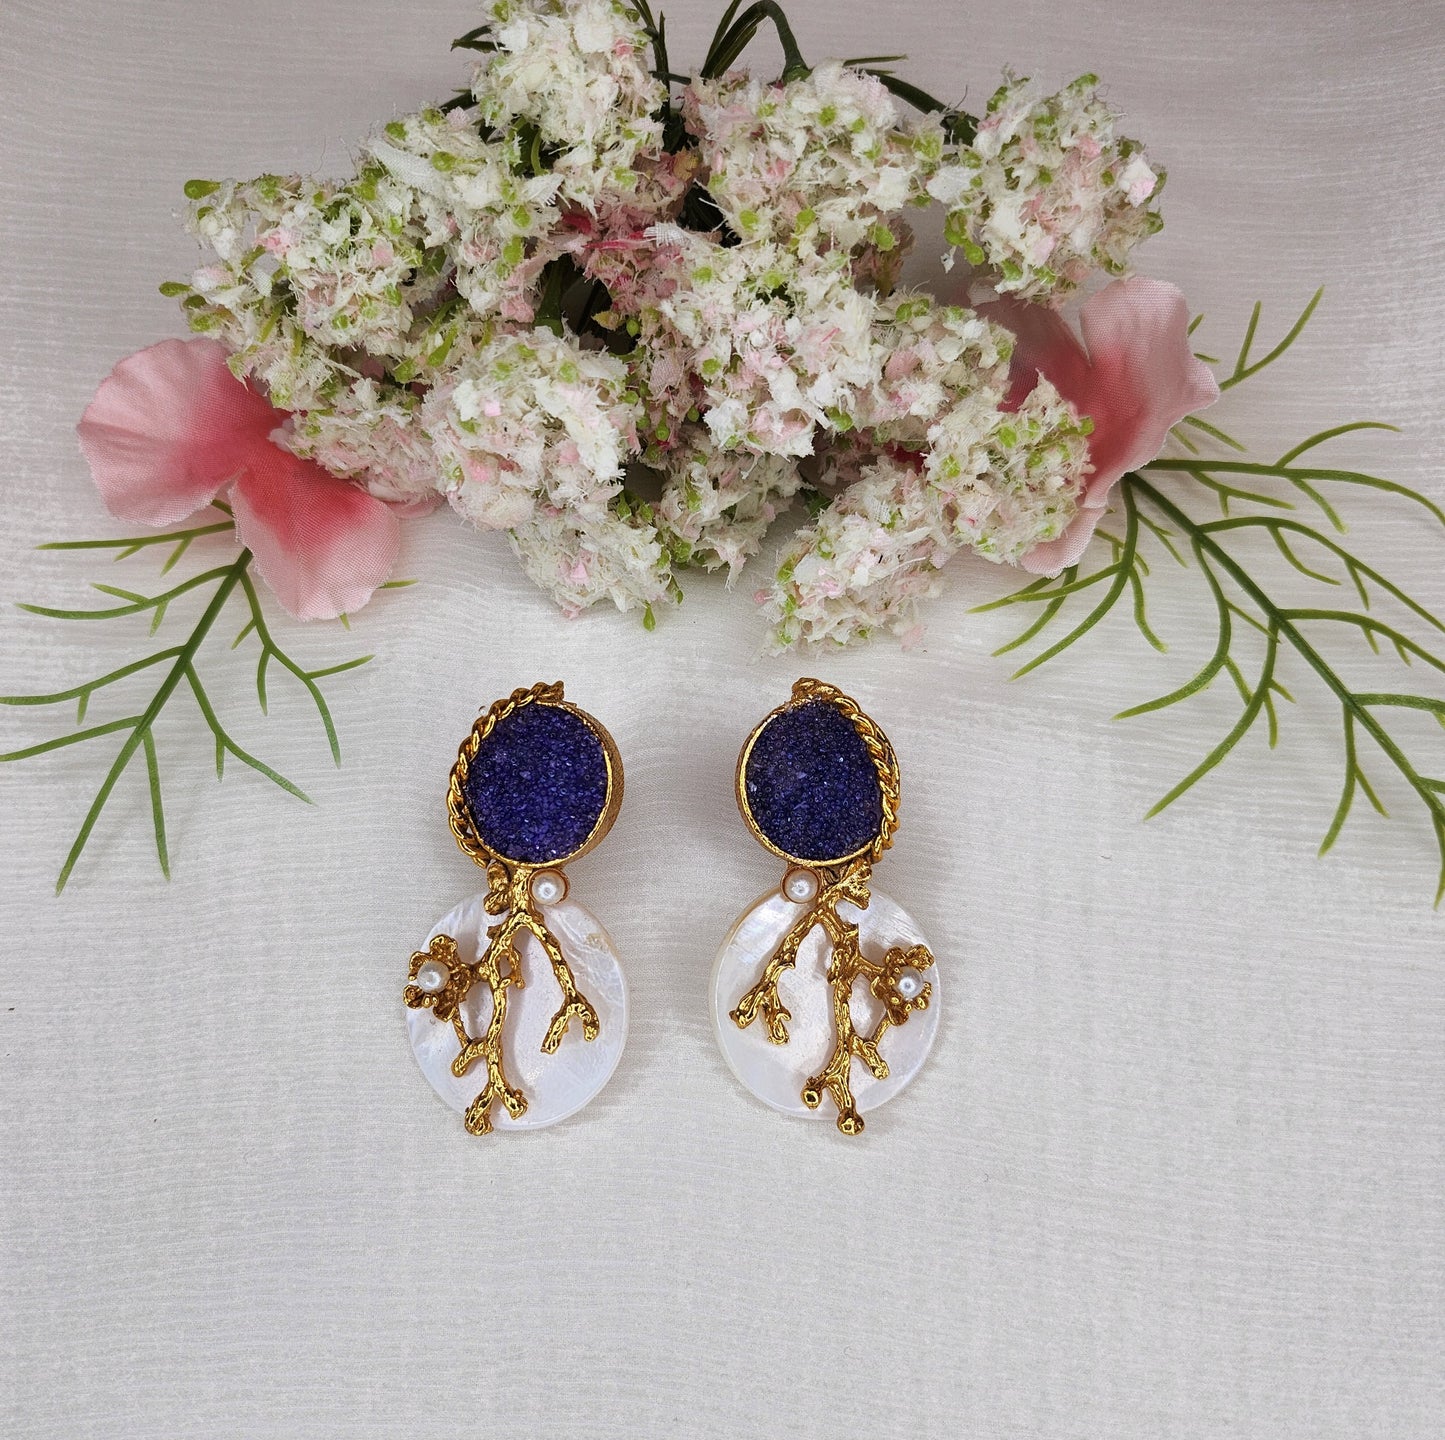 HAMSA JEWELRY - Purple and white gemstone earring